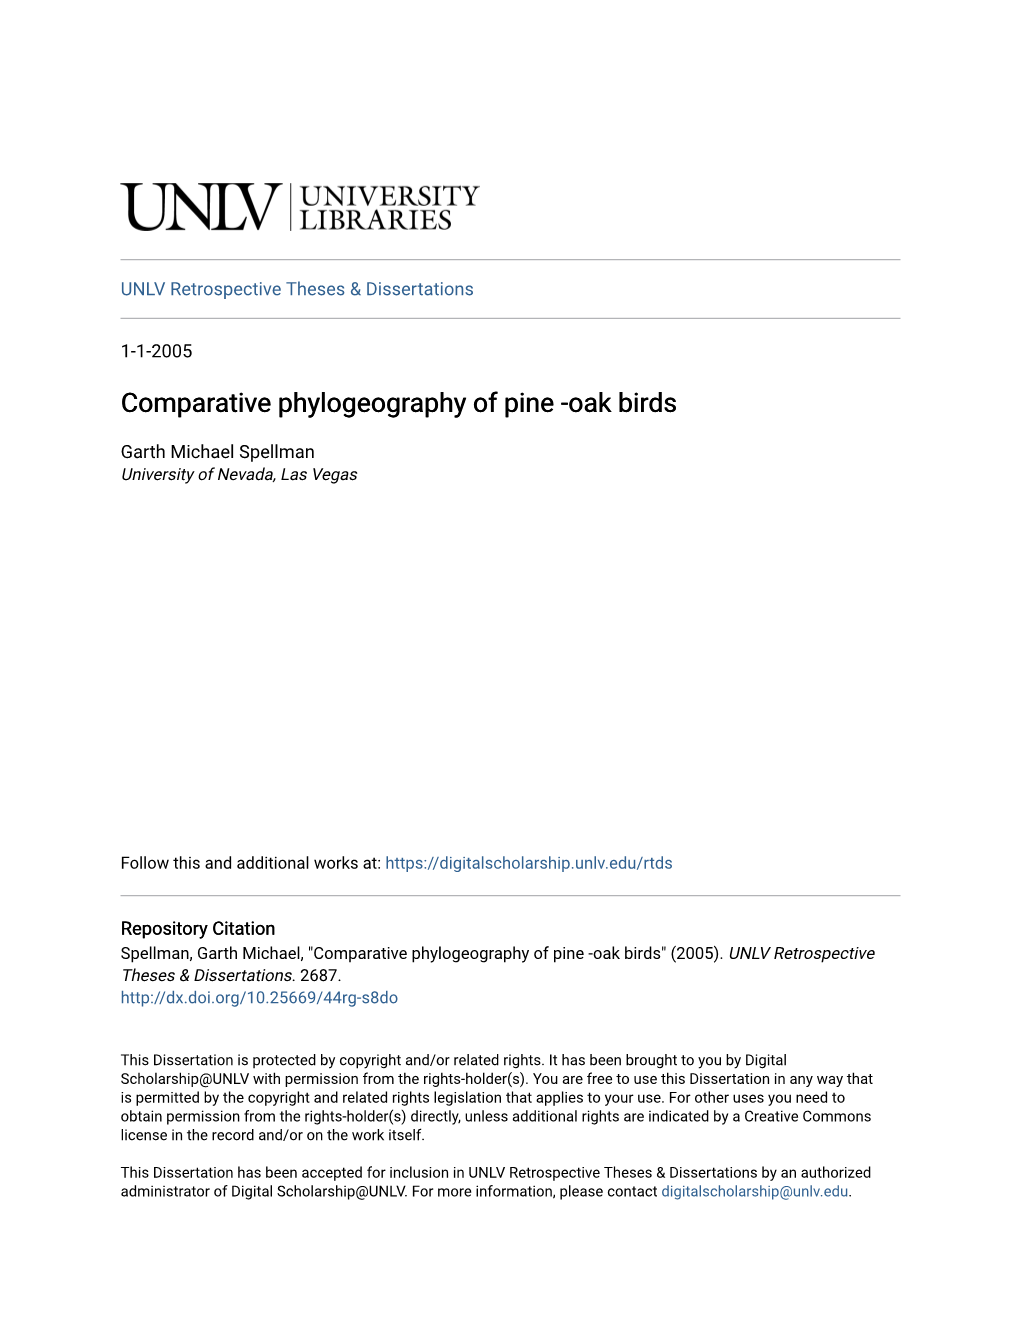 Comparative Phylogeography of Pine -Oak Birds